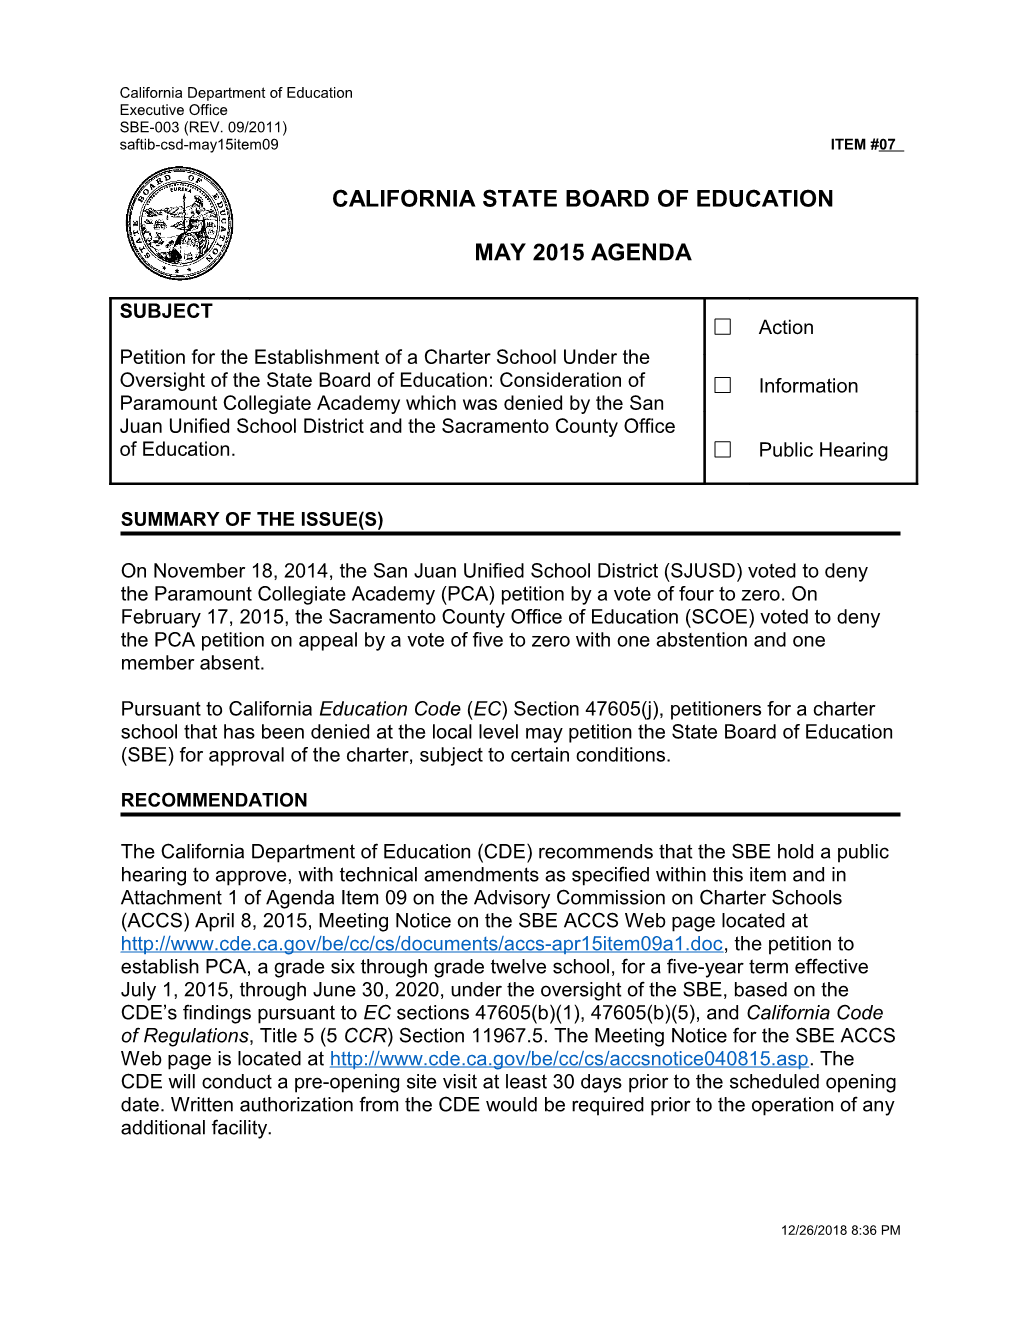 May 2015 Agenda Item 07 - Meeting Agendas (CA State Board of Education)